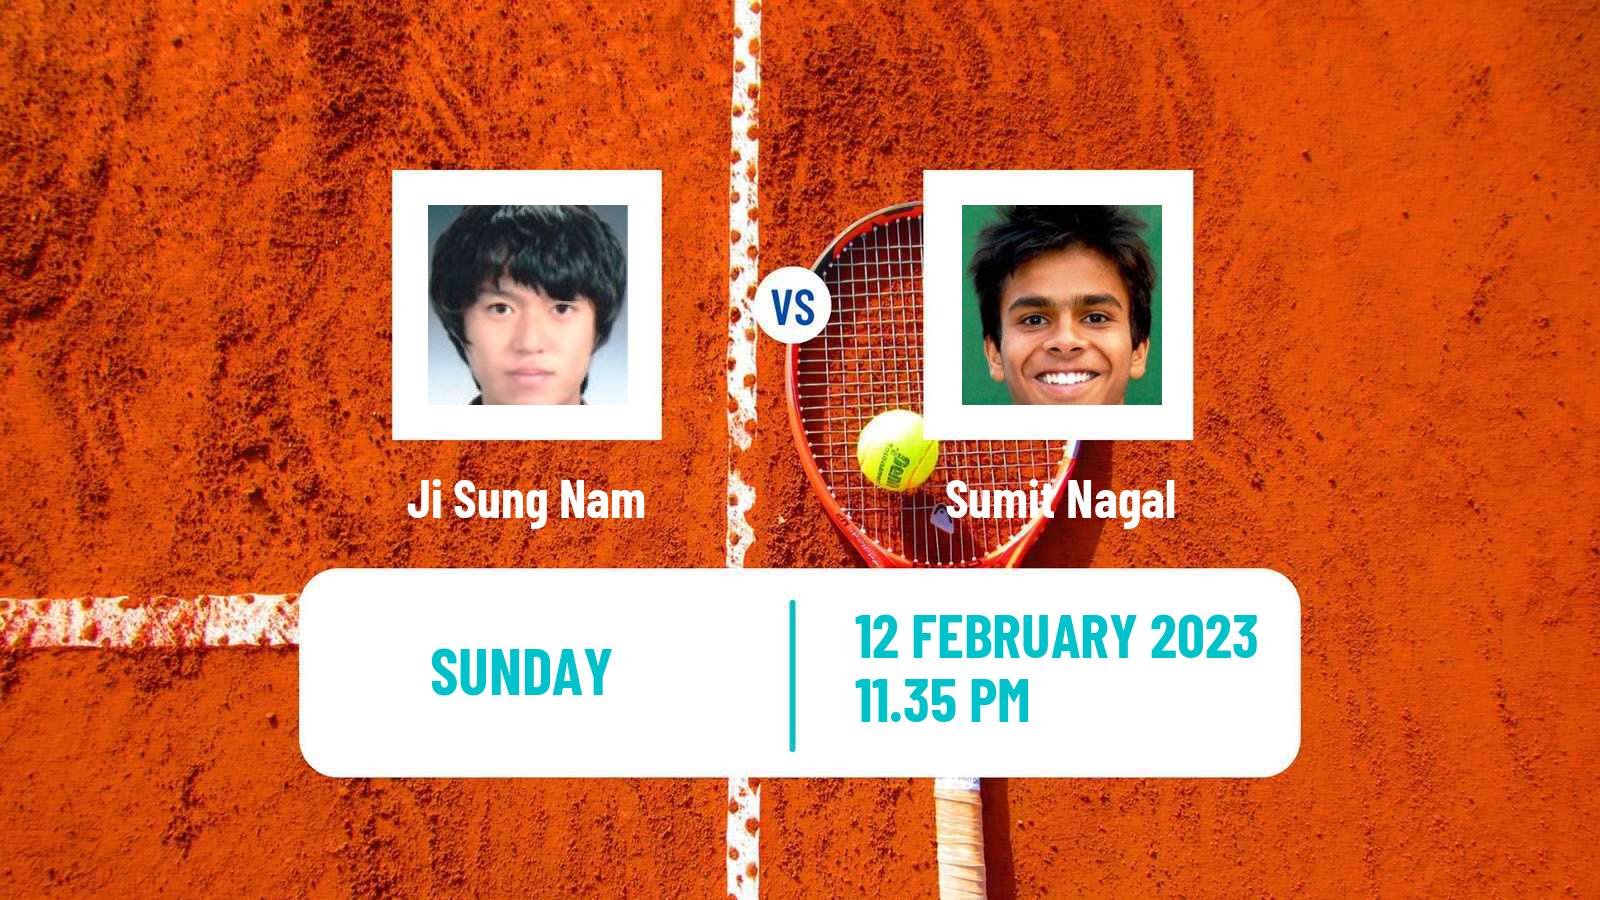 Tennis ATP Challenger Ji Sung Nam - Sumit Nagal